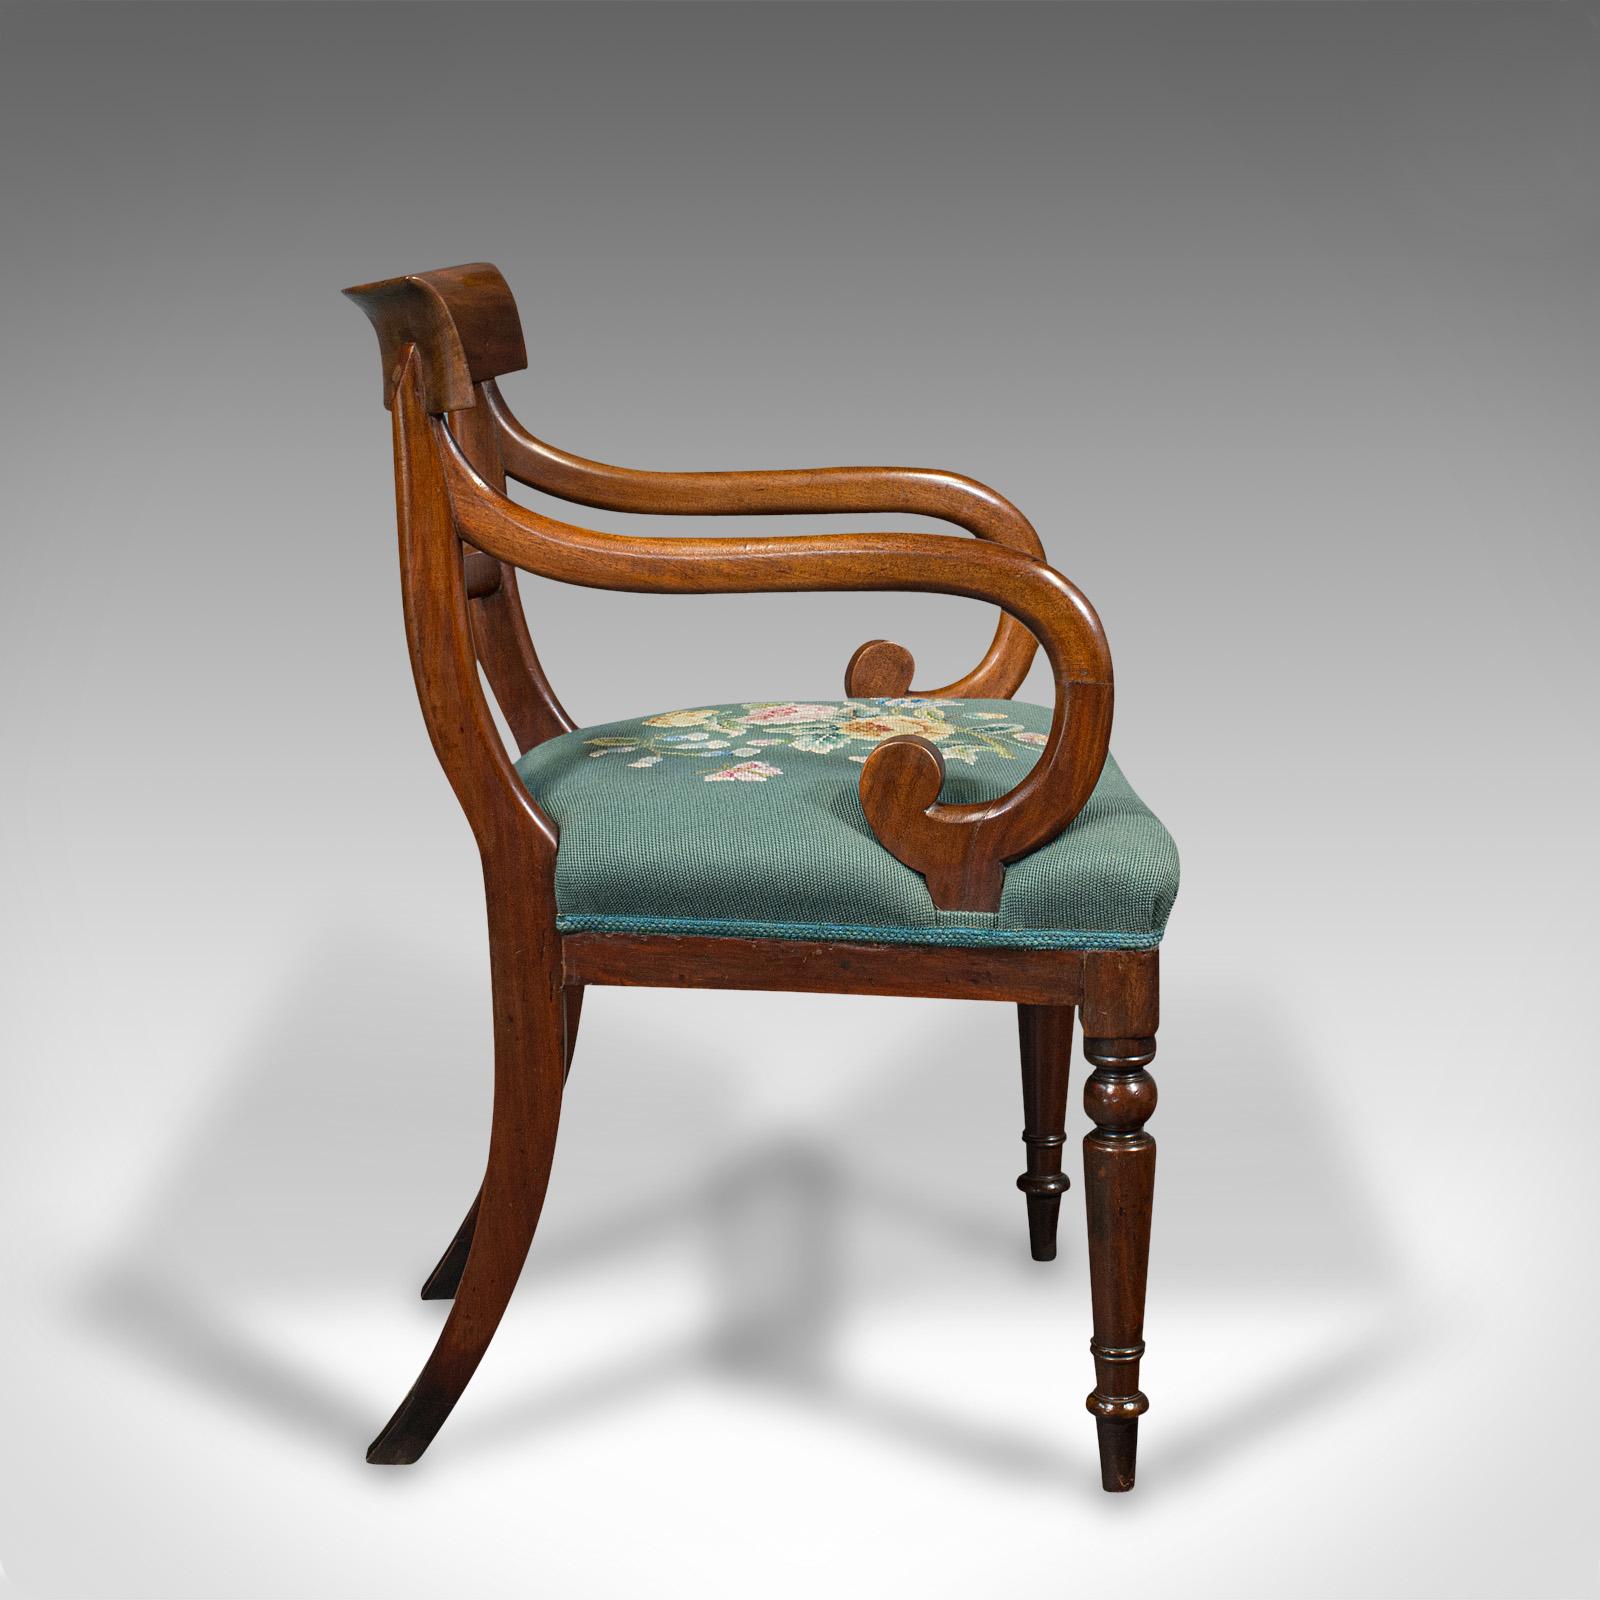 British Antique Scroll Arm Desk Chair, English, Armchair, Needlepoint, Regency, C.1820